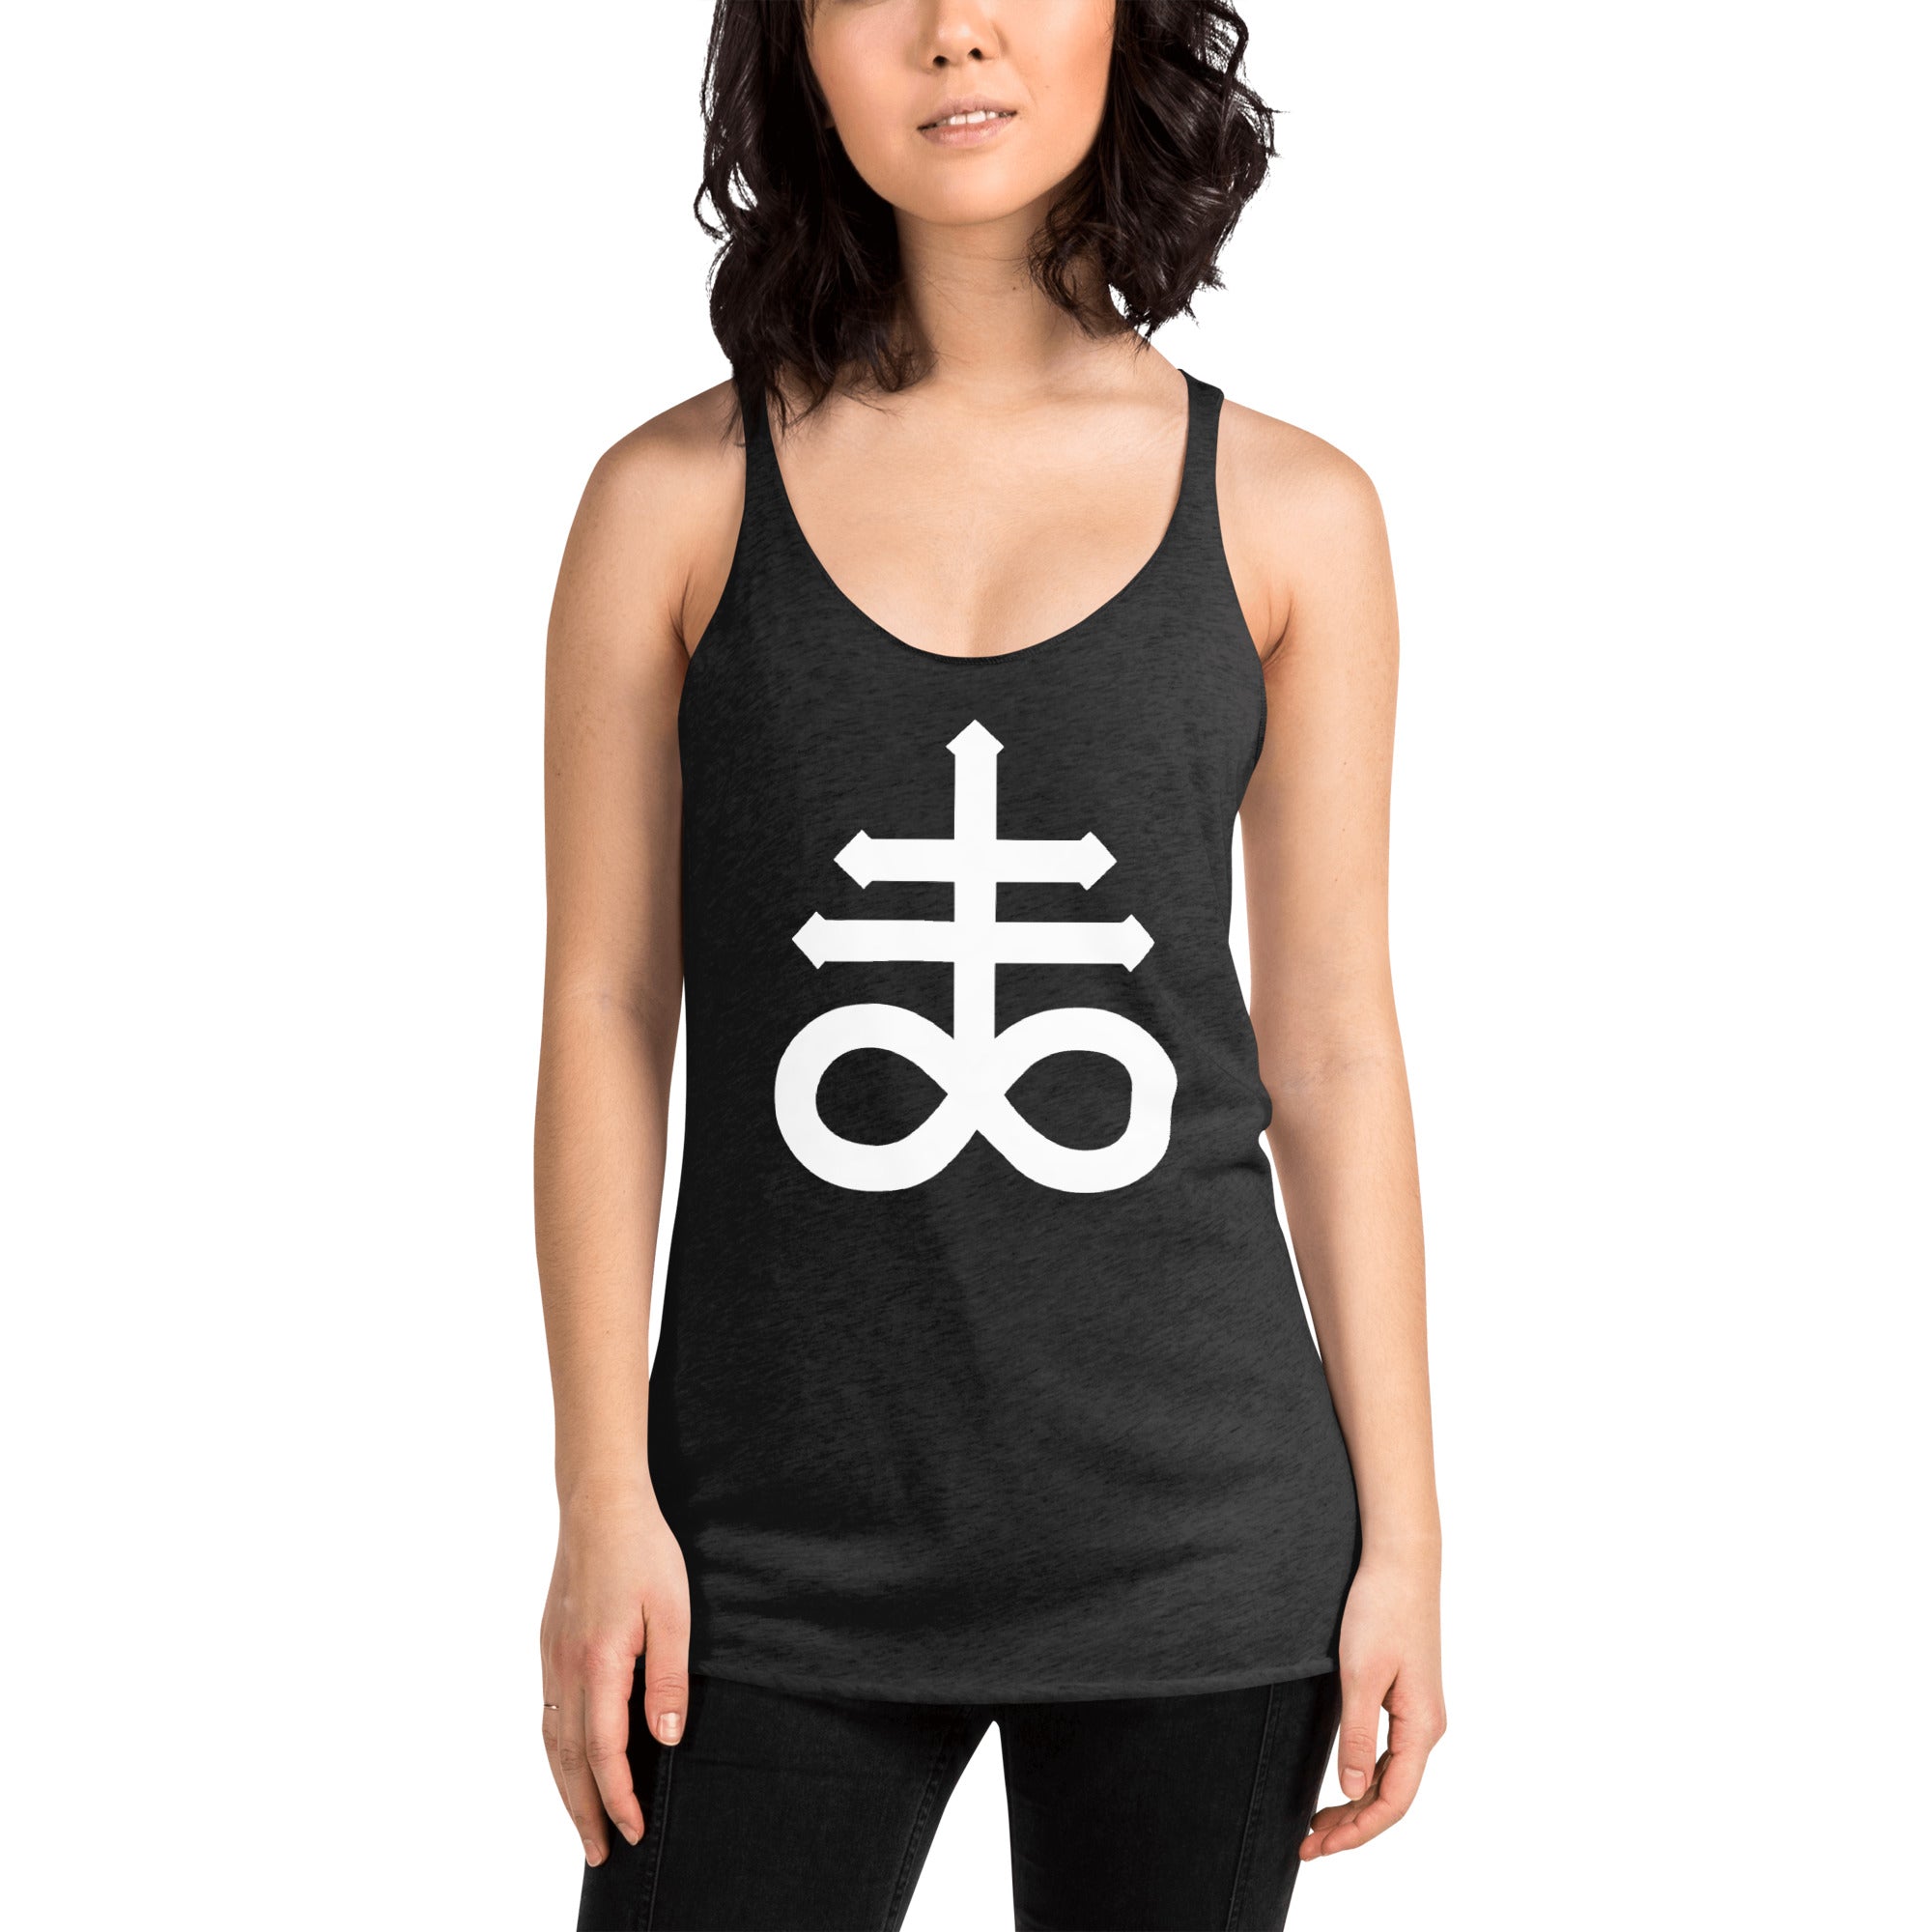 The Leviathan Cross of Satan Occult Symbol  Women's Racerback Tank Top Shirt White Print - Edge of Life Designs